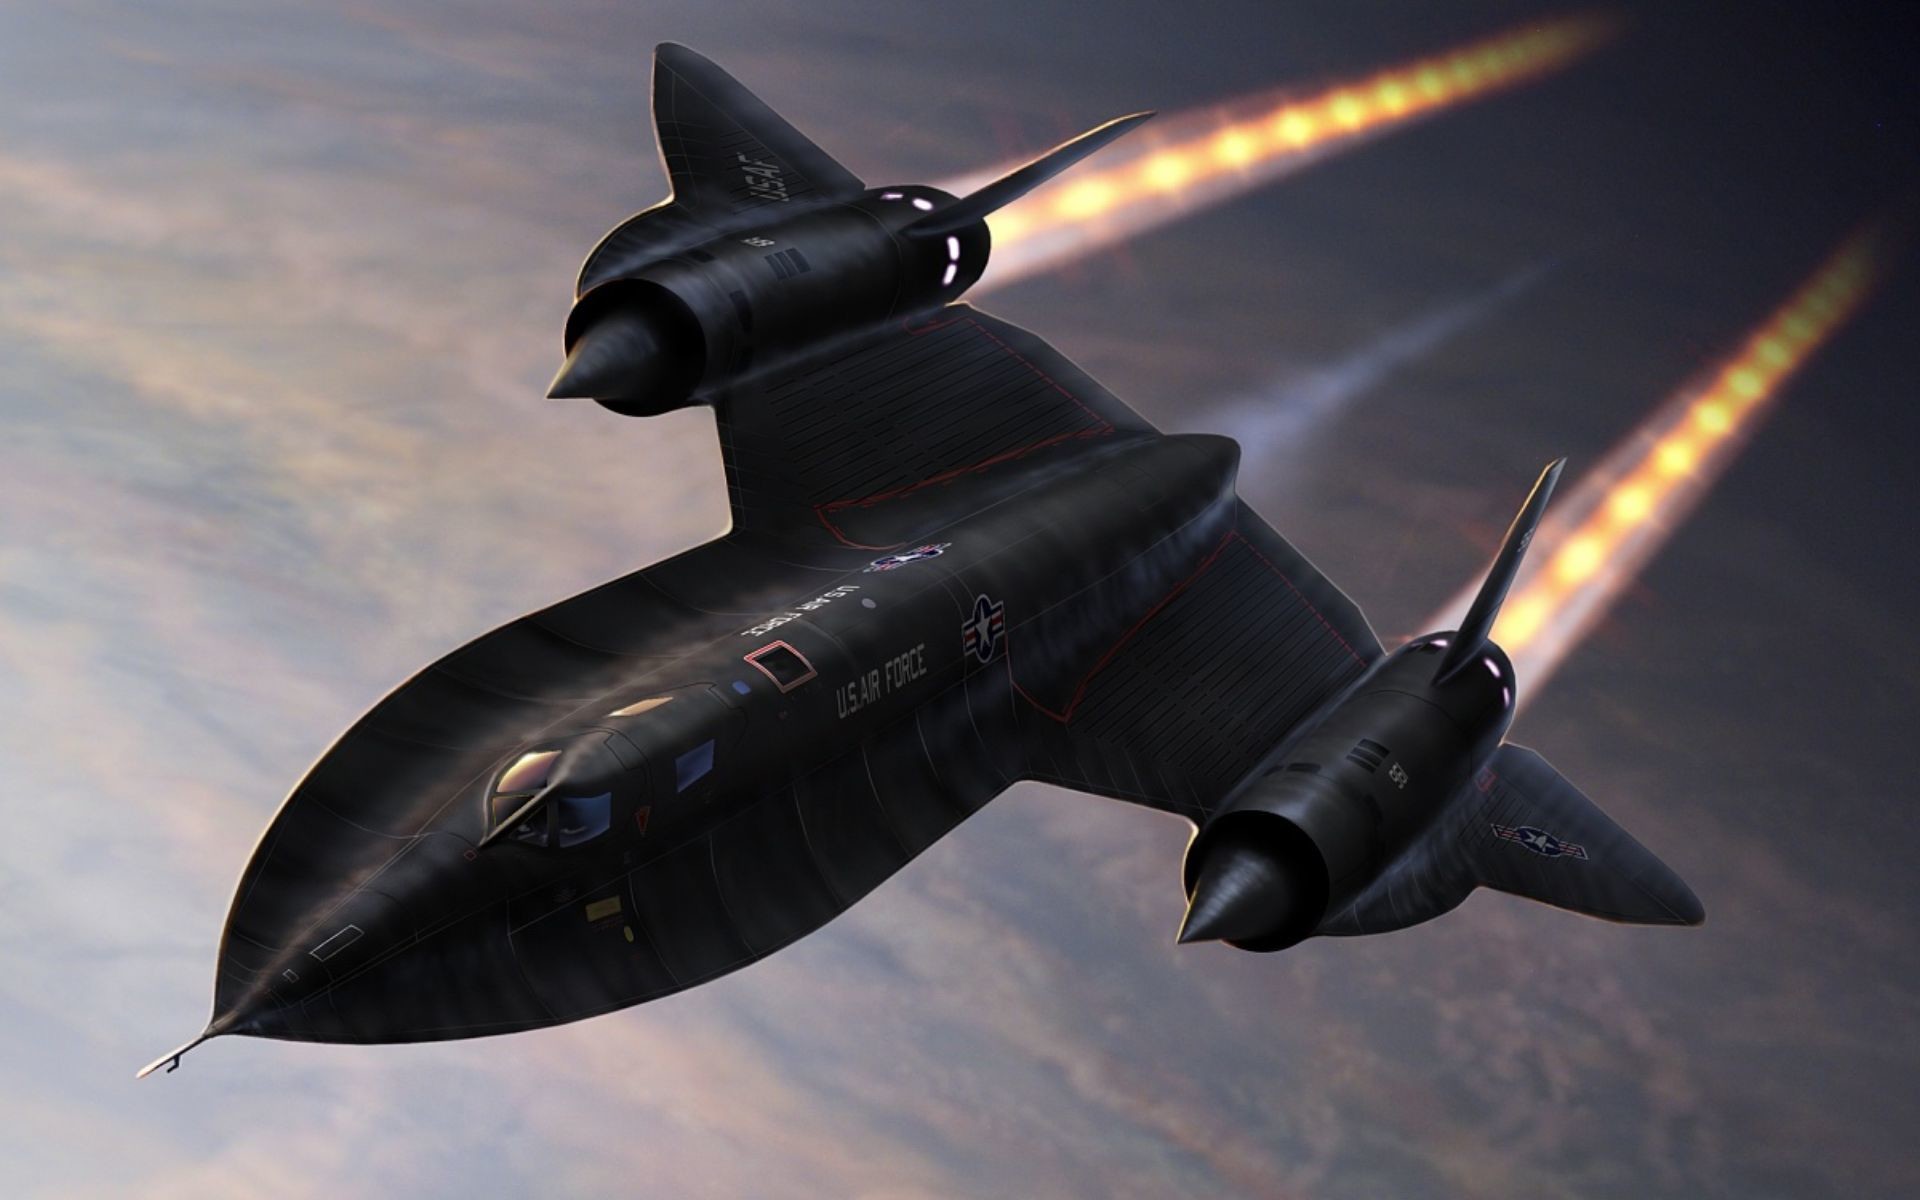 Рекорд скорости самолета. Самолет SR-71 Blackbird. Локхид SR-71 чёрный Дрозд. Ср 71 Блэкберд. Самолет Lockheed SR-71.